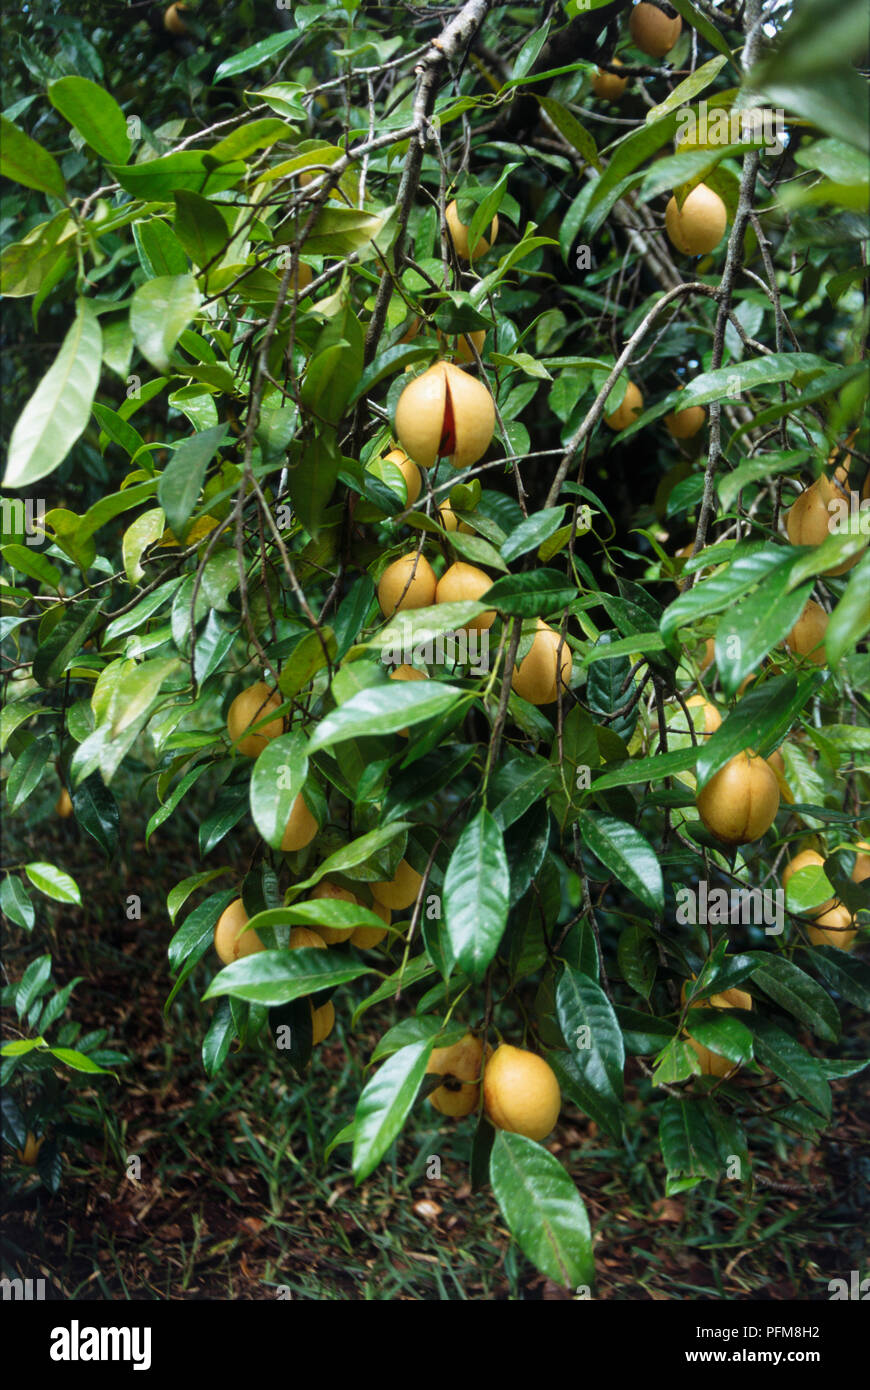 Myristica fragrans (Nutmeg) ripe fruit on branchlets Stock Photo